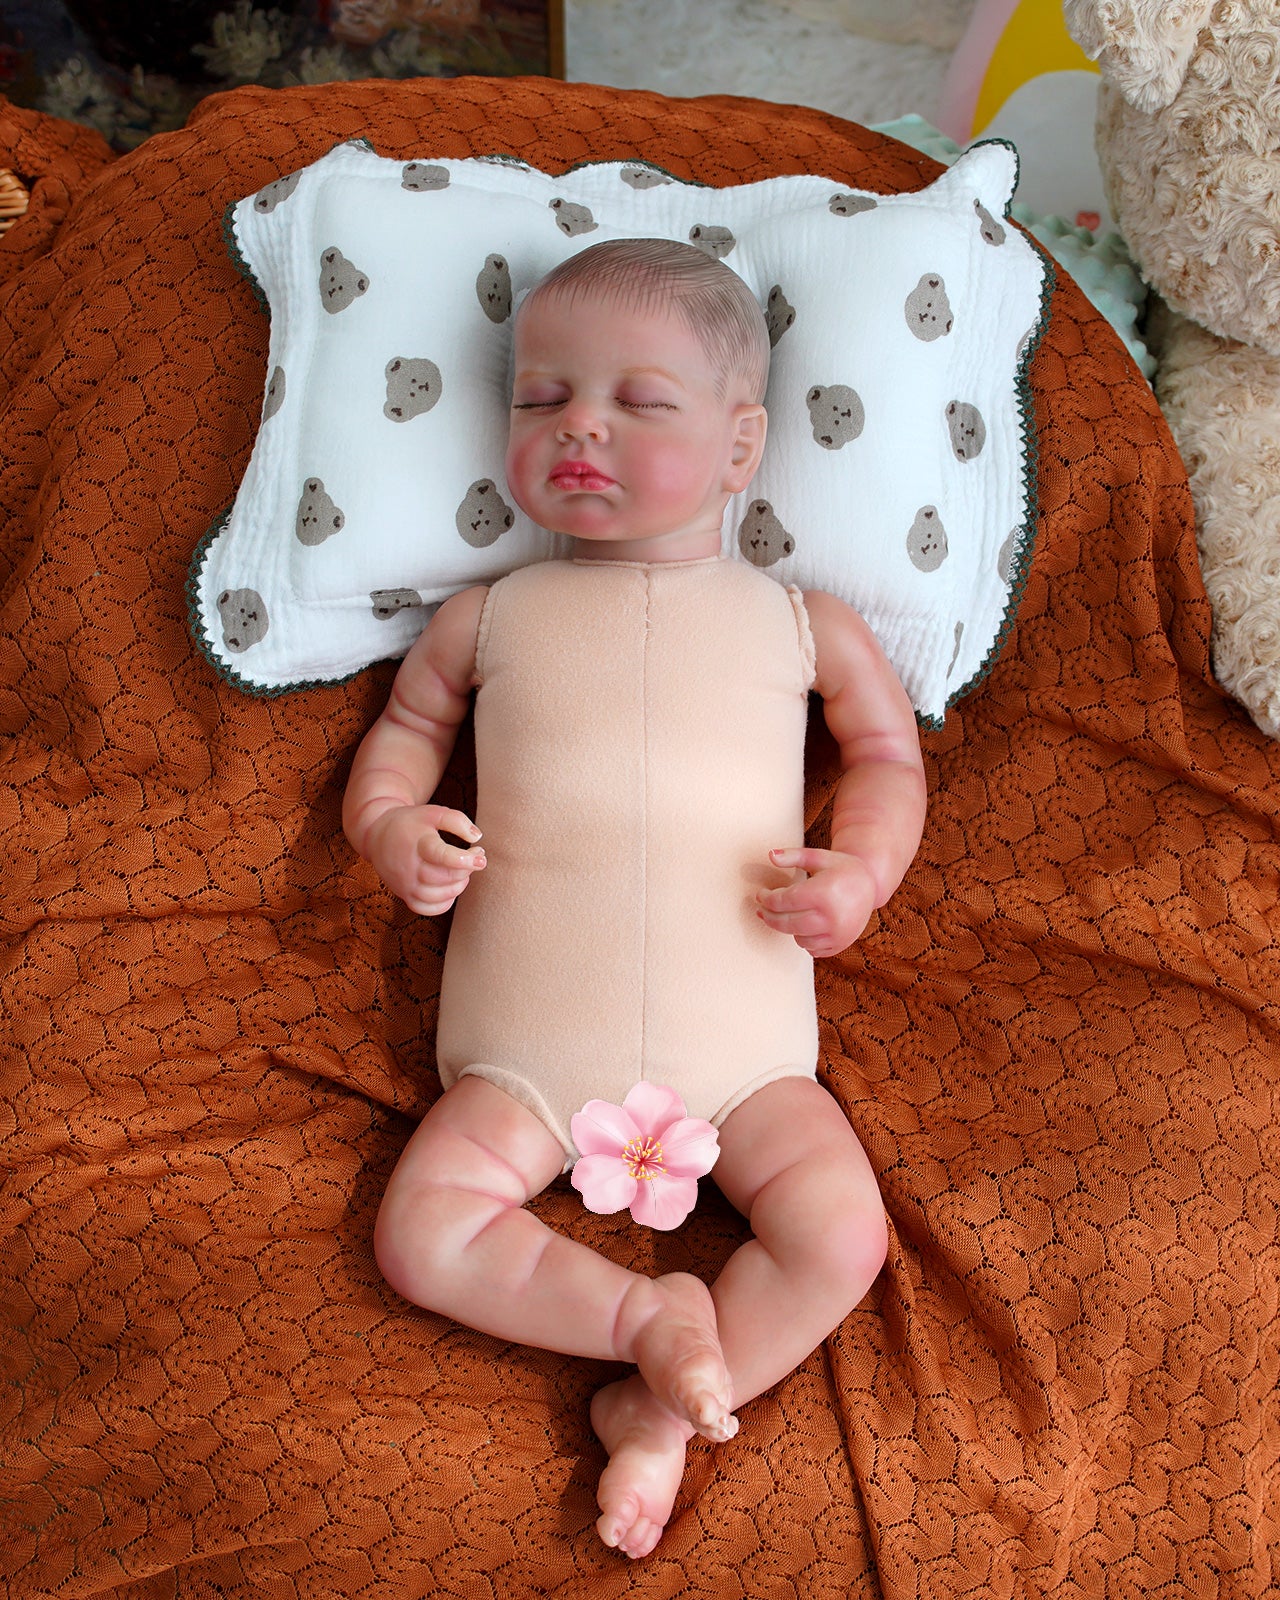 Monica - 20" Reborn Baby Dolls Realistic Soft Silicone Vinyl Newborn Girl With Sleeping Eyes